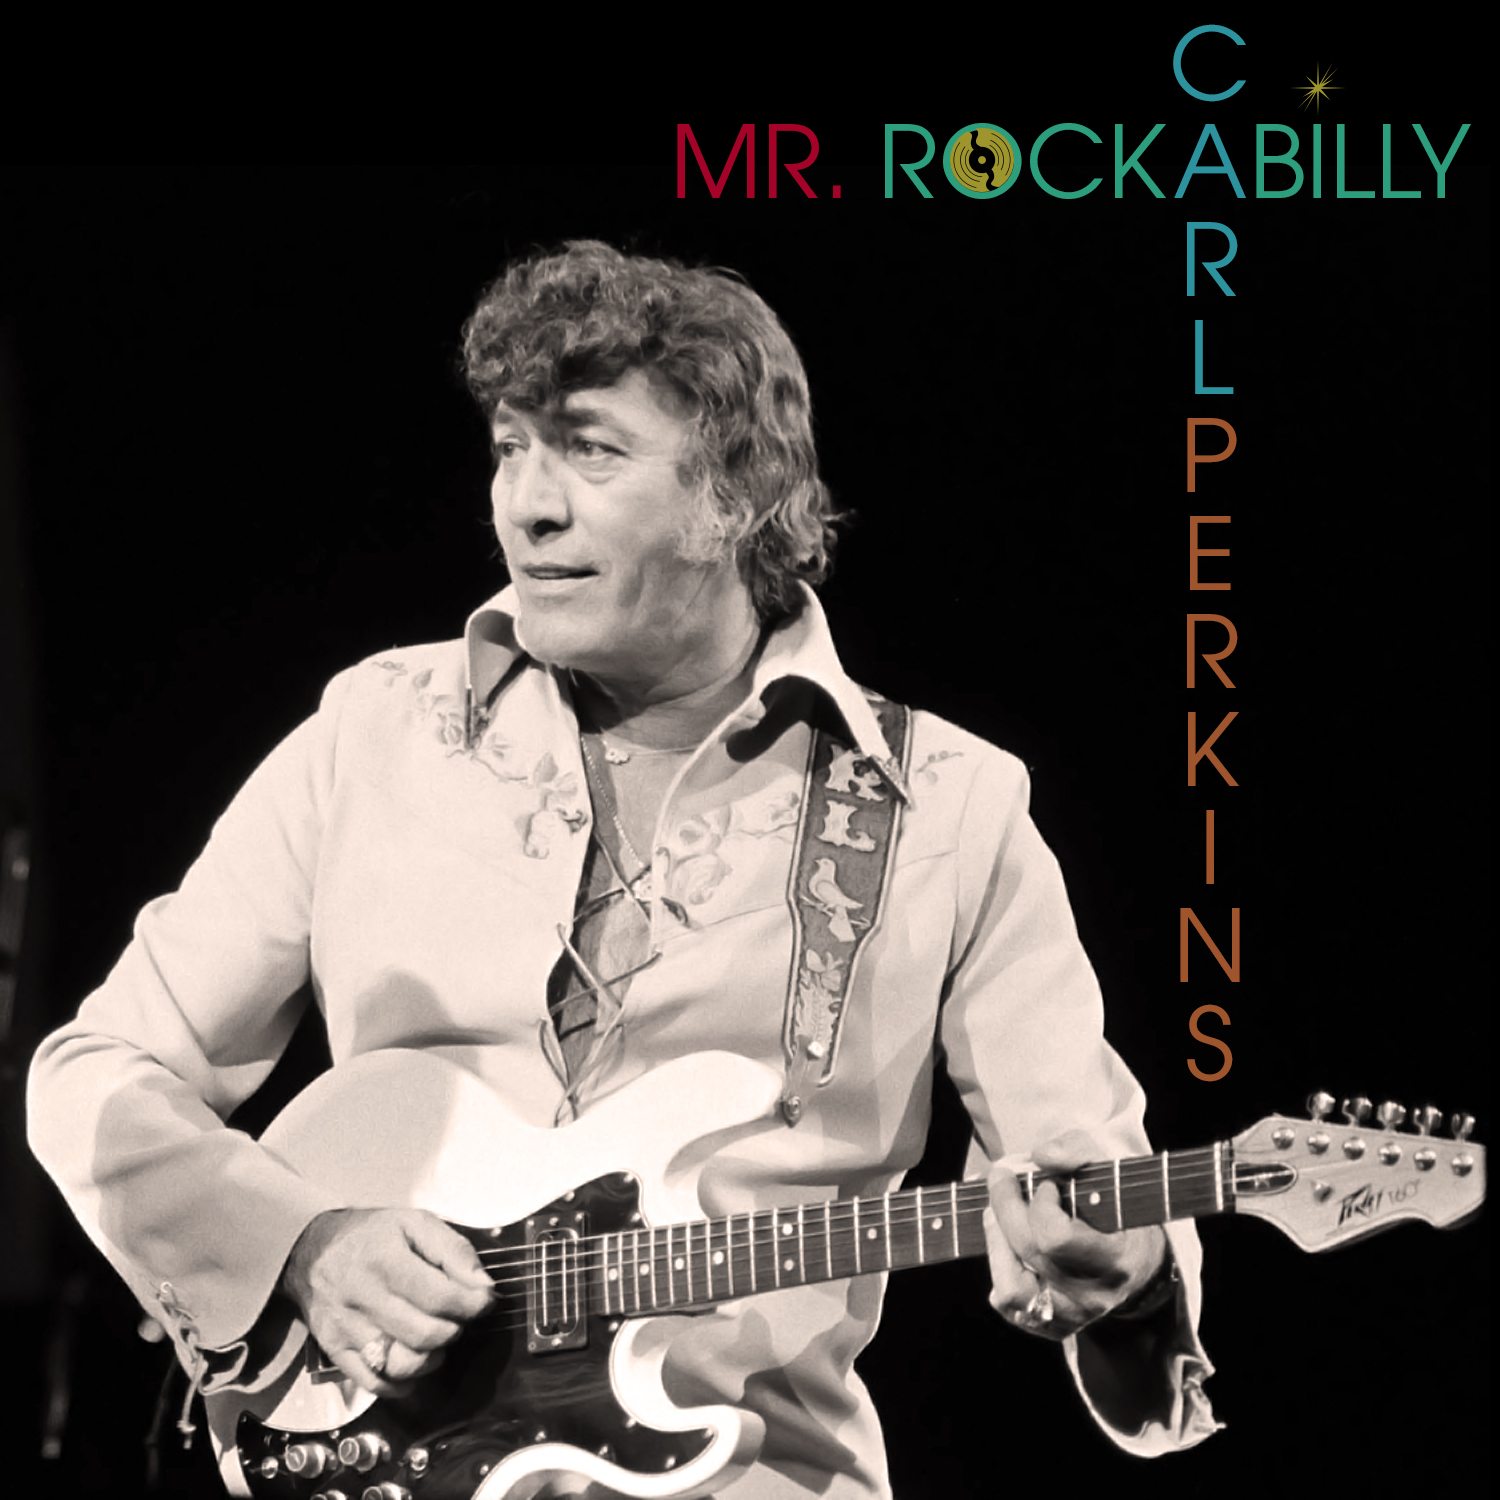 Mr. Rockabilly